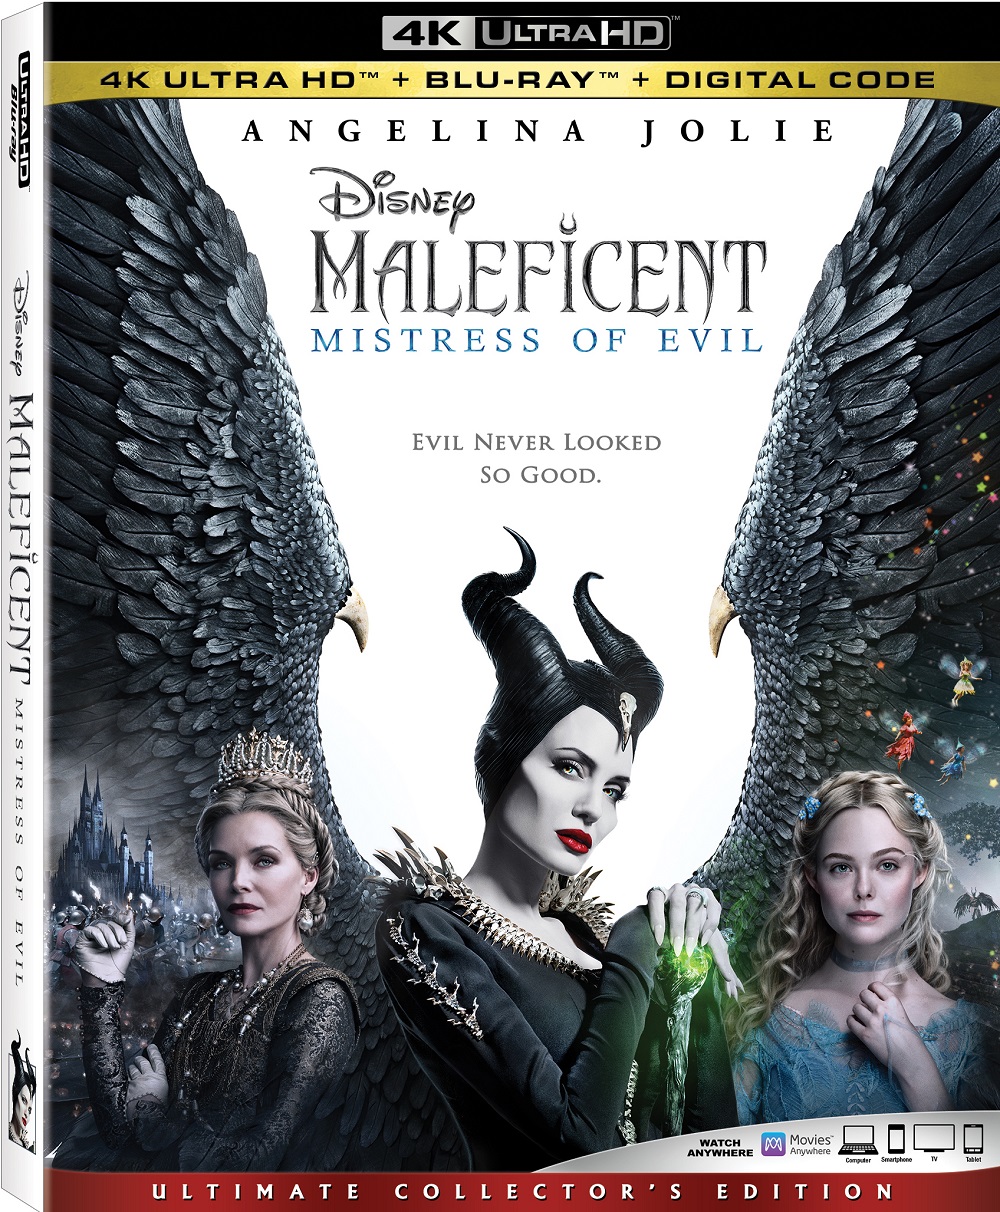 Maleficent 2 Mistress of Evil Digital Blu-ray DVD release